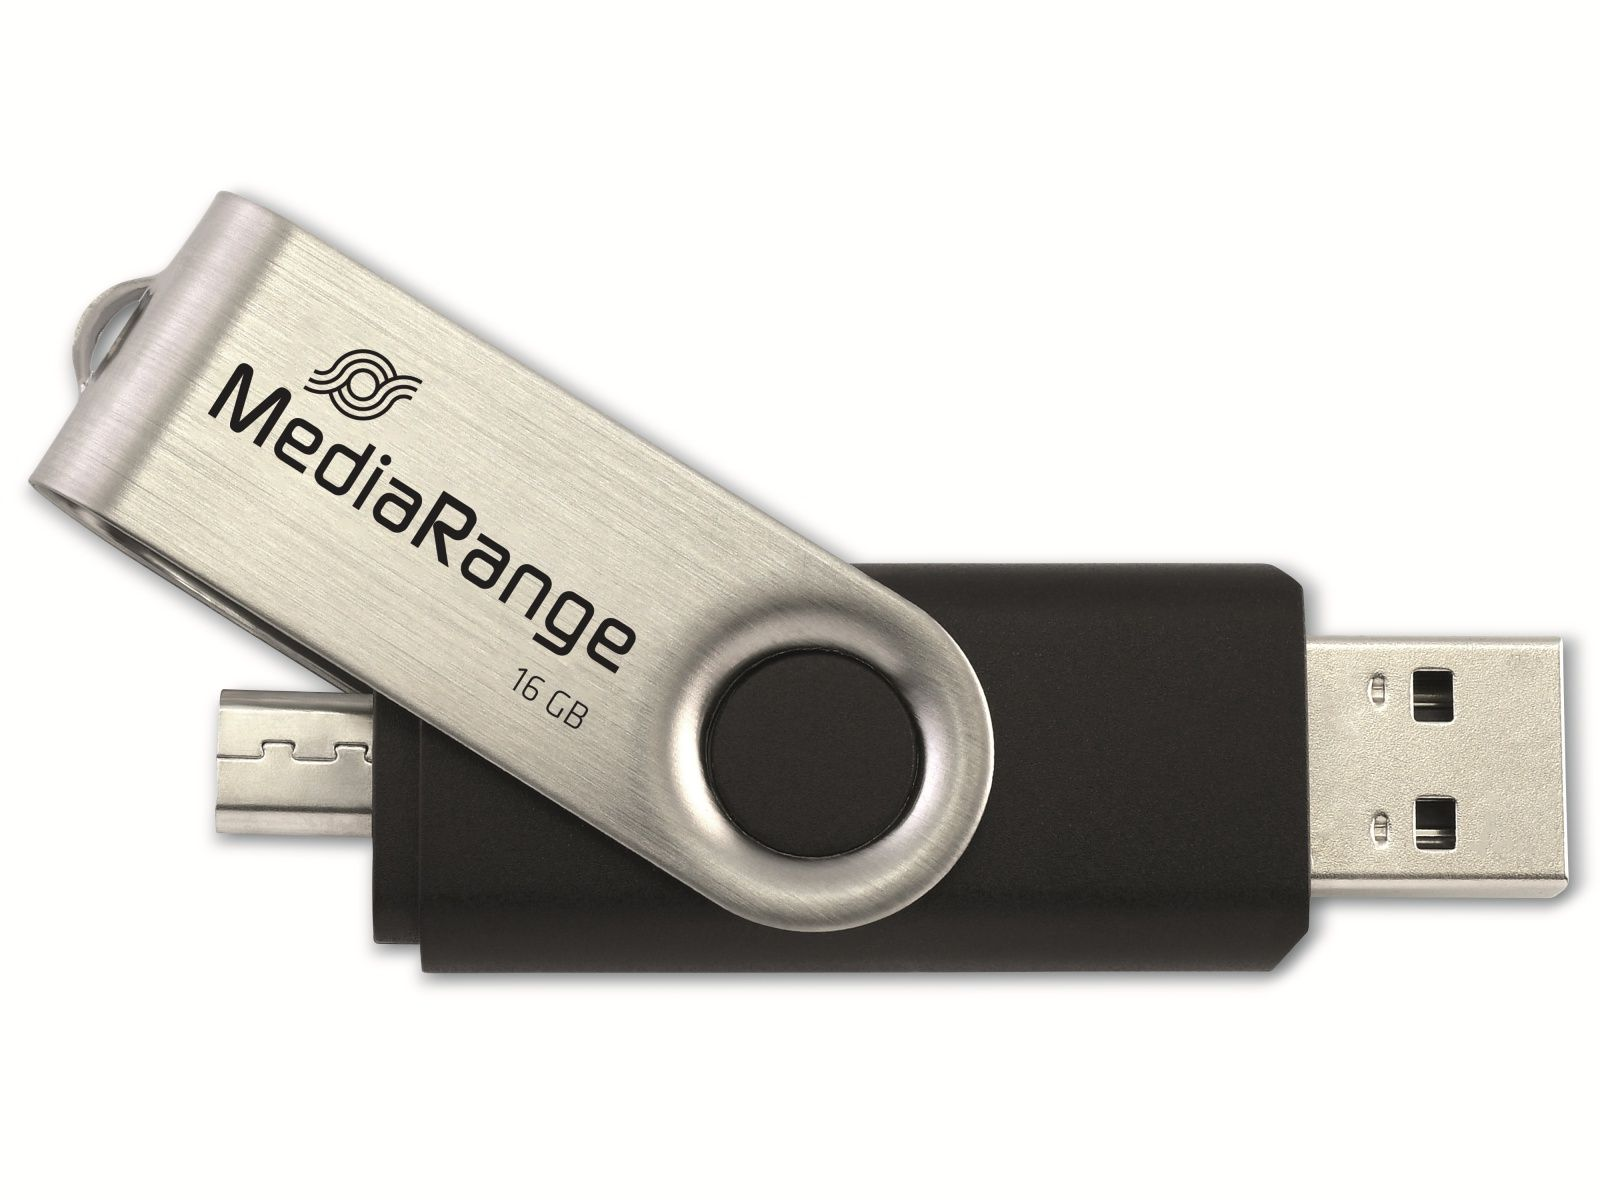 MEDIARANGE USB-Stick MR931-2, USB 2.0 Micro, GB GB) und (schwarz/silber, USB-Stick und 16 16